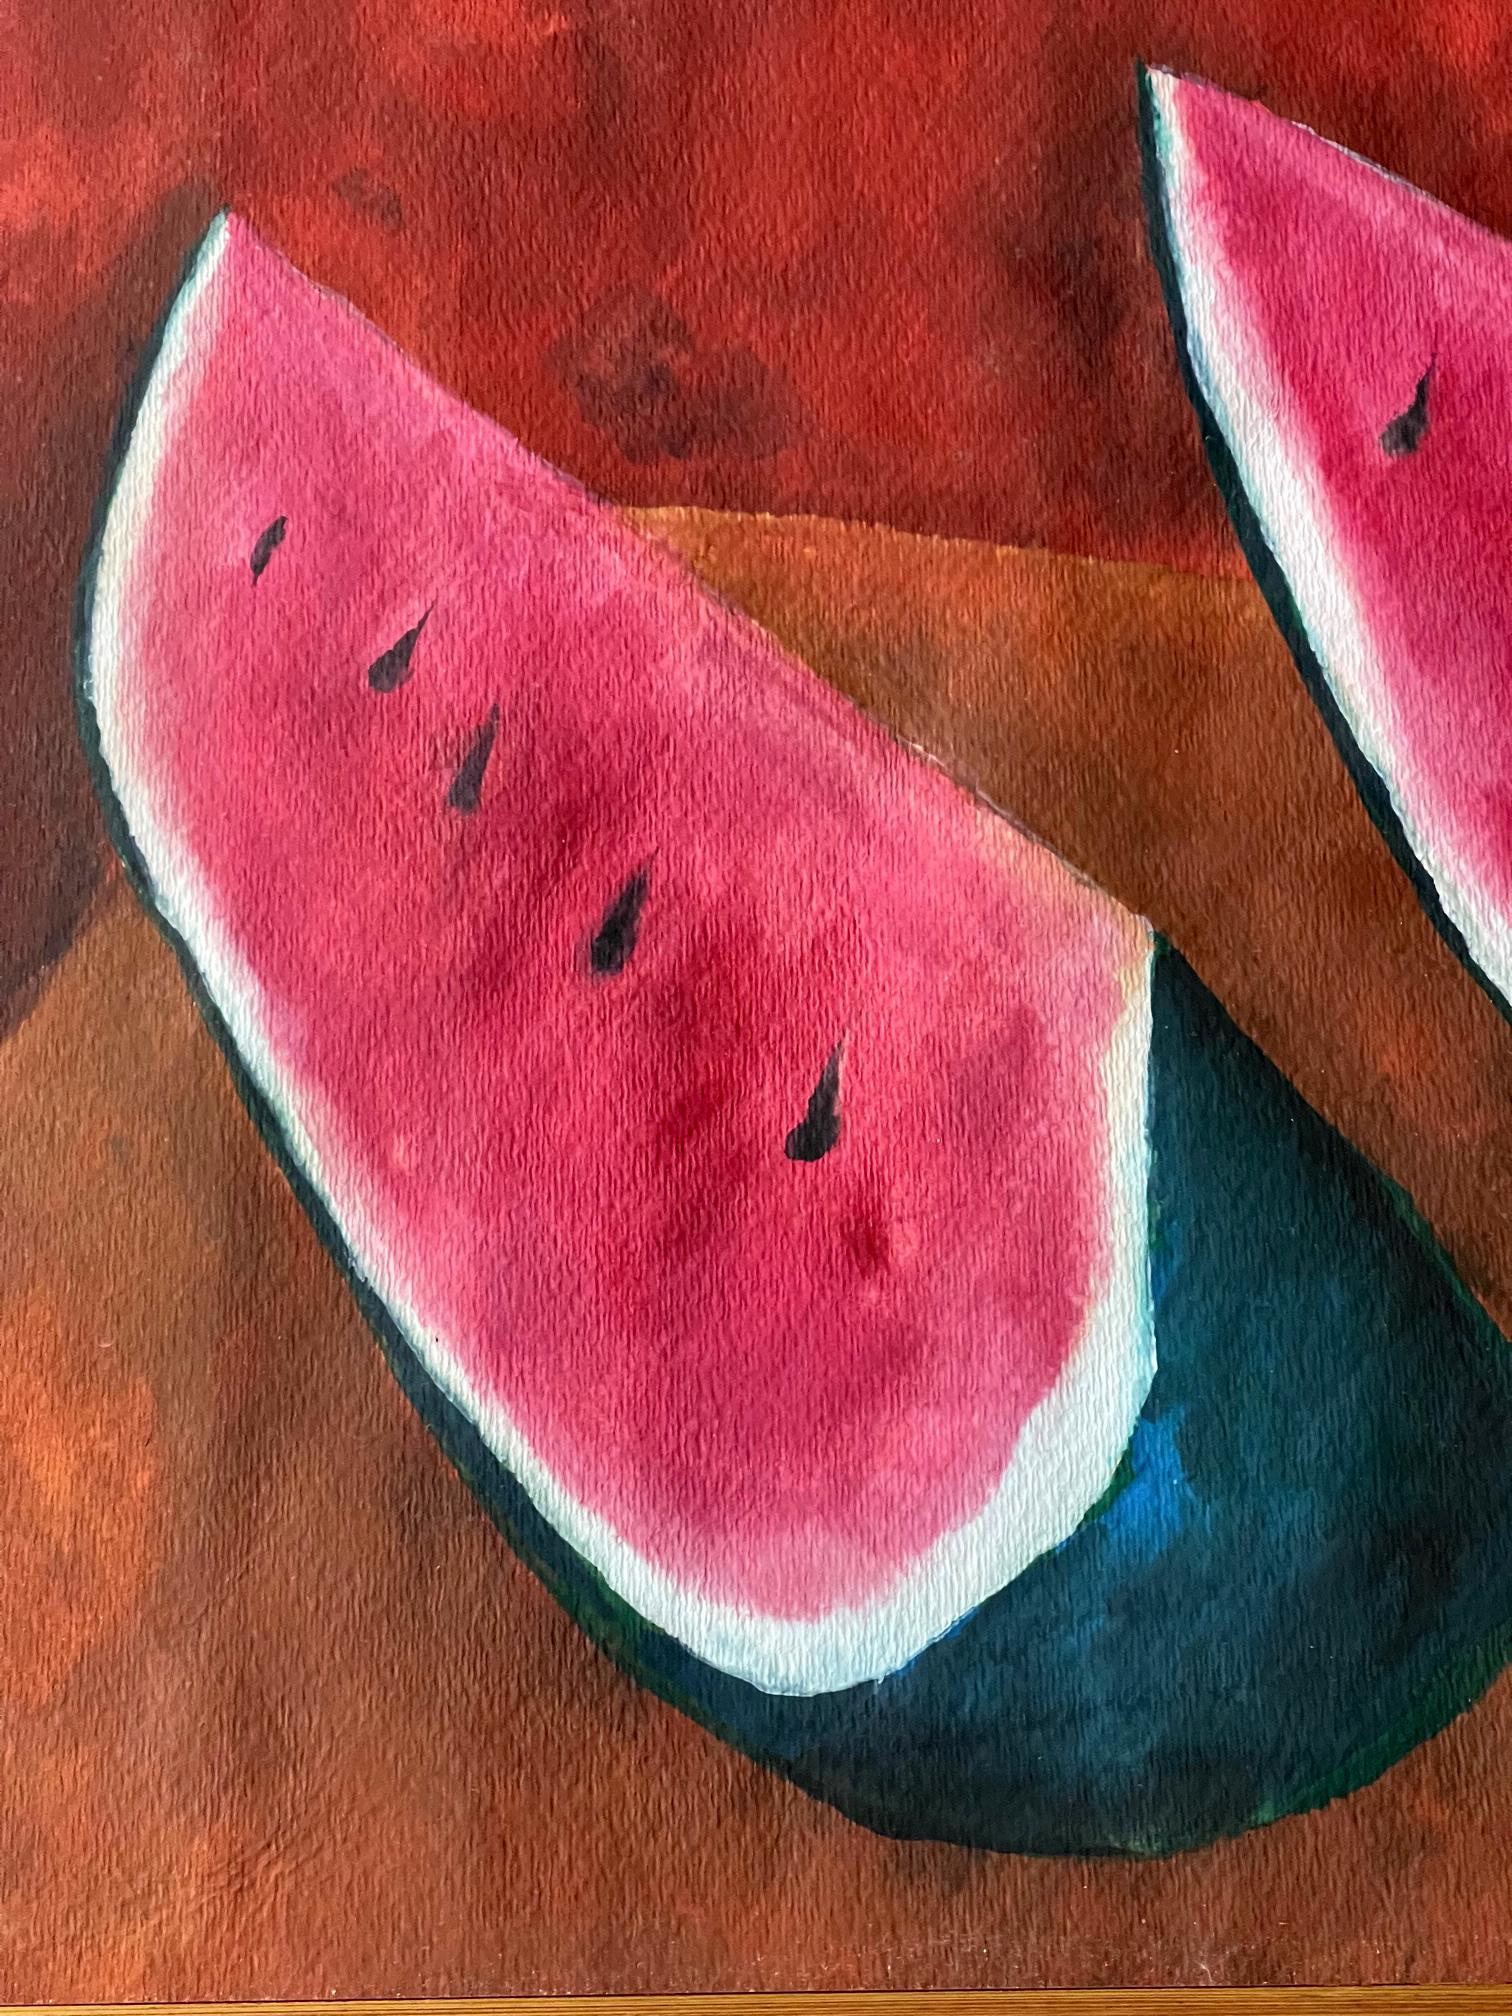 rufino tamayo watermelon